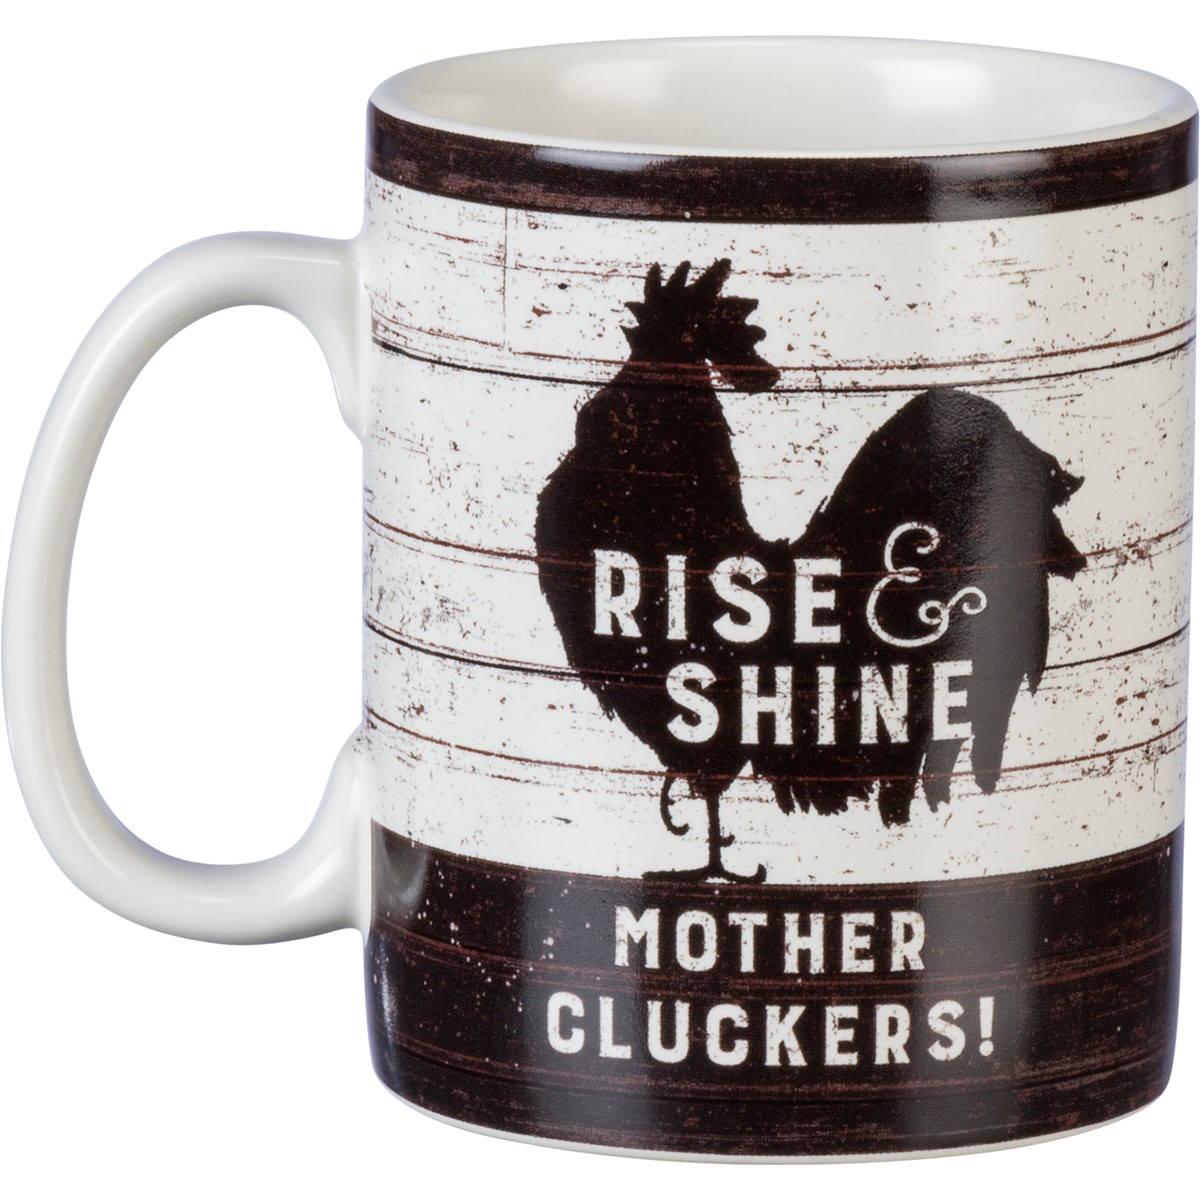 "Rise & Shine Mother Cluckers" Mug